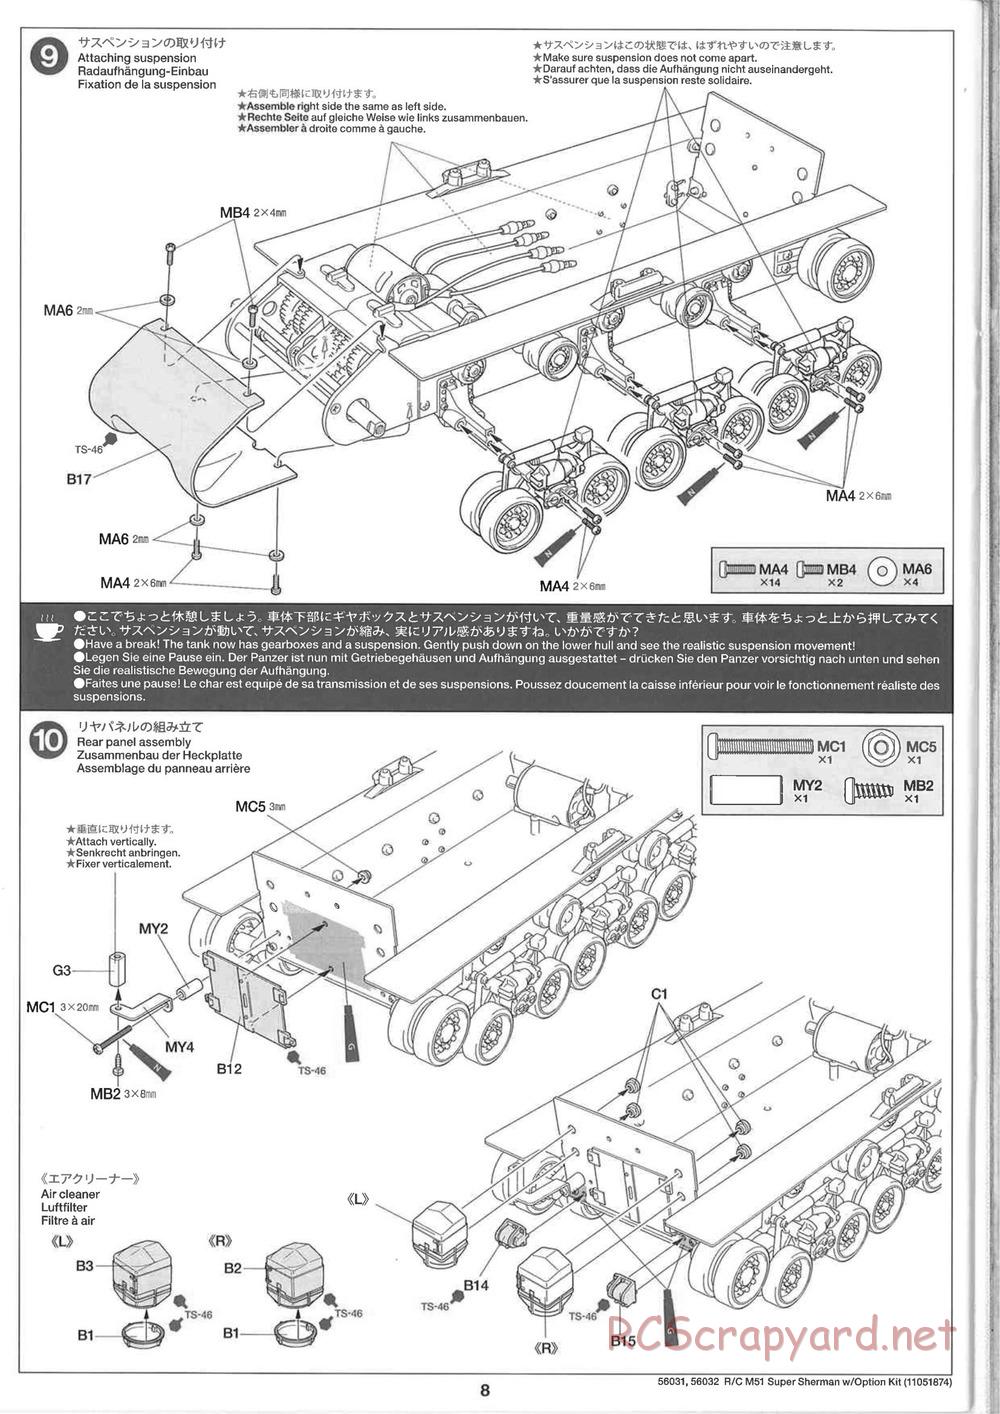 Tamiya - Super Sherman M-51 - 1/16 Scale Chassis - Manual - Page 8